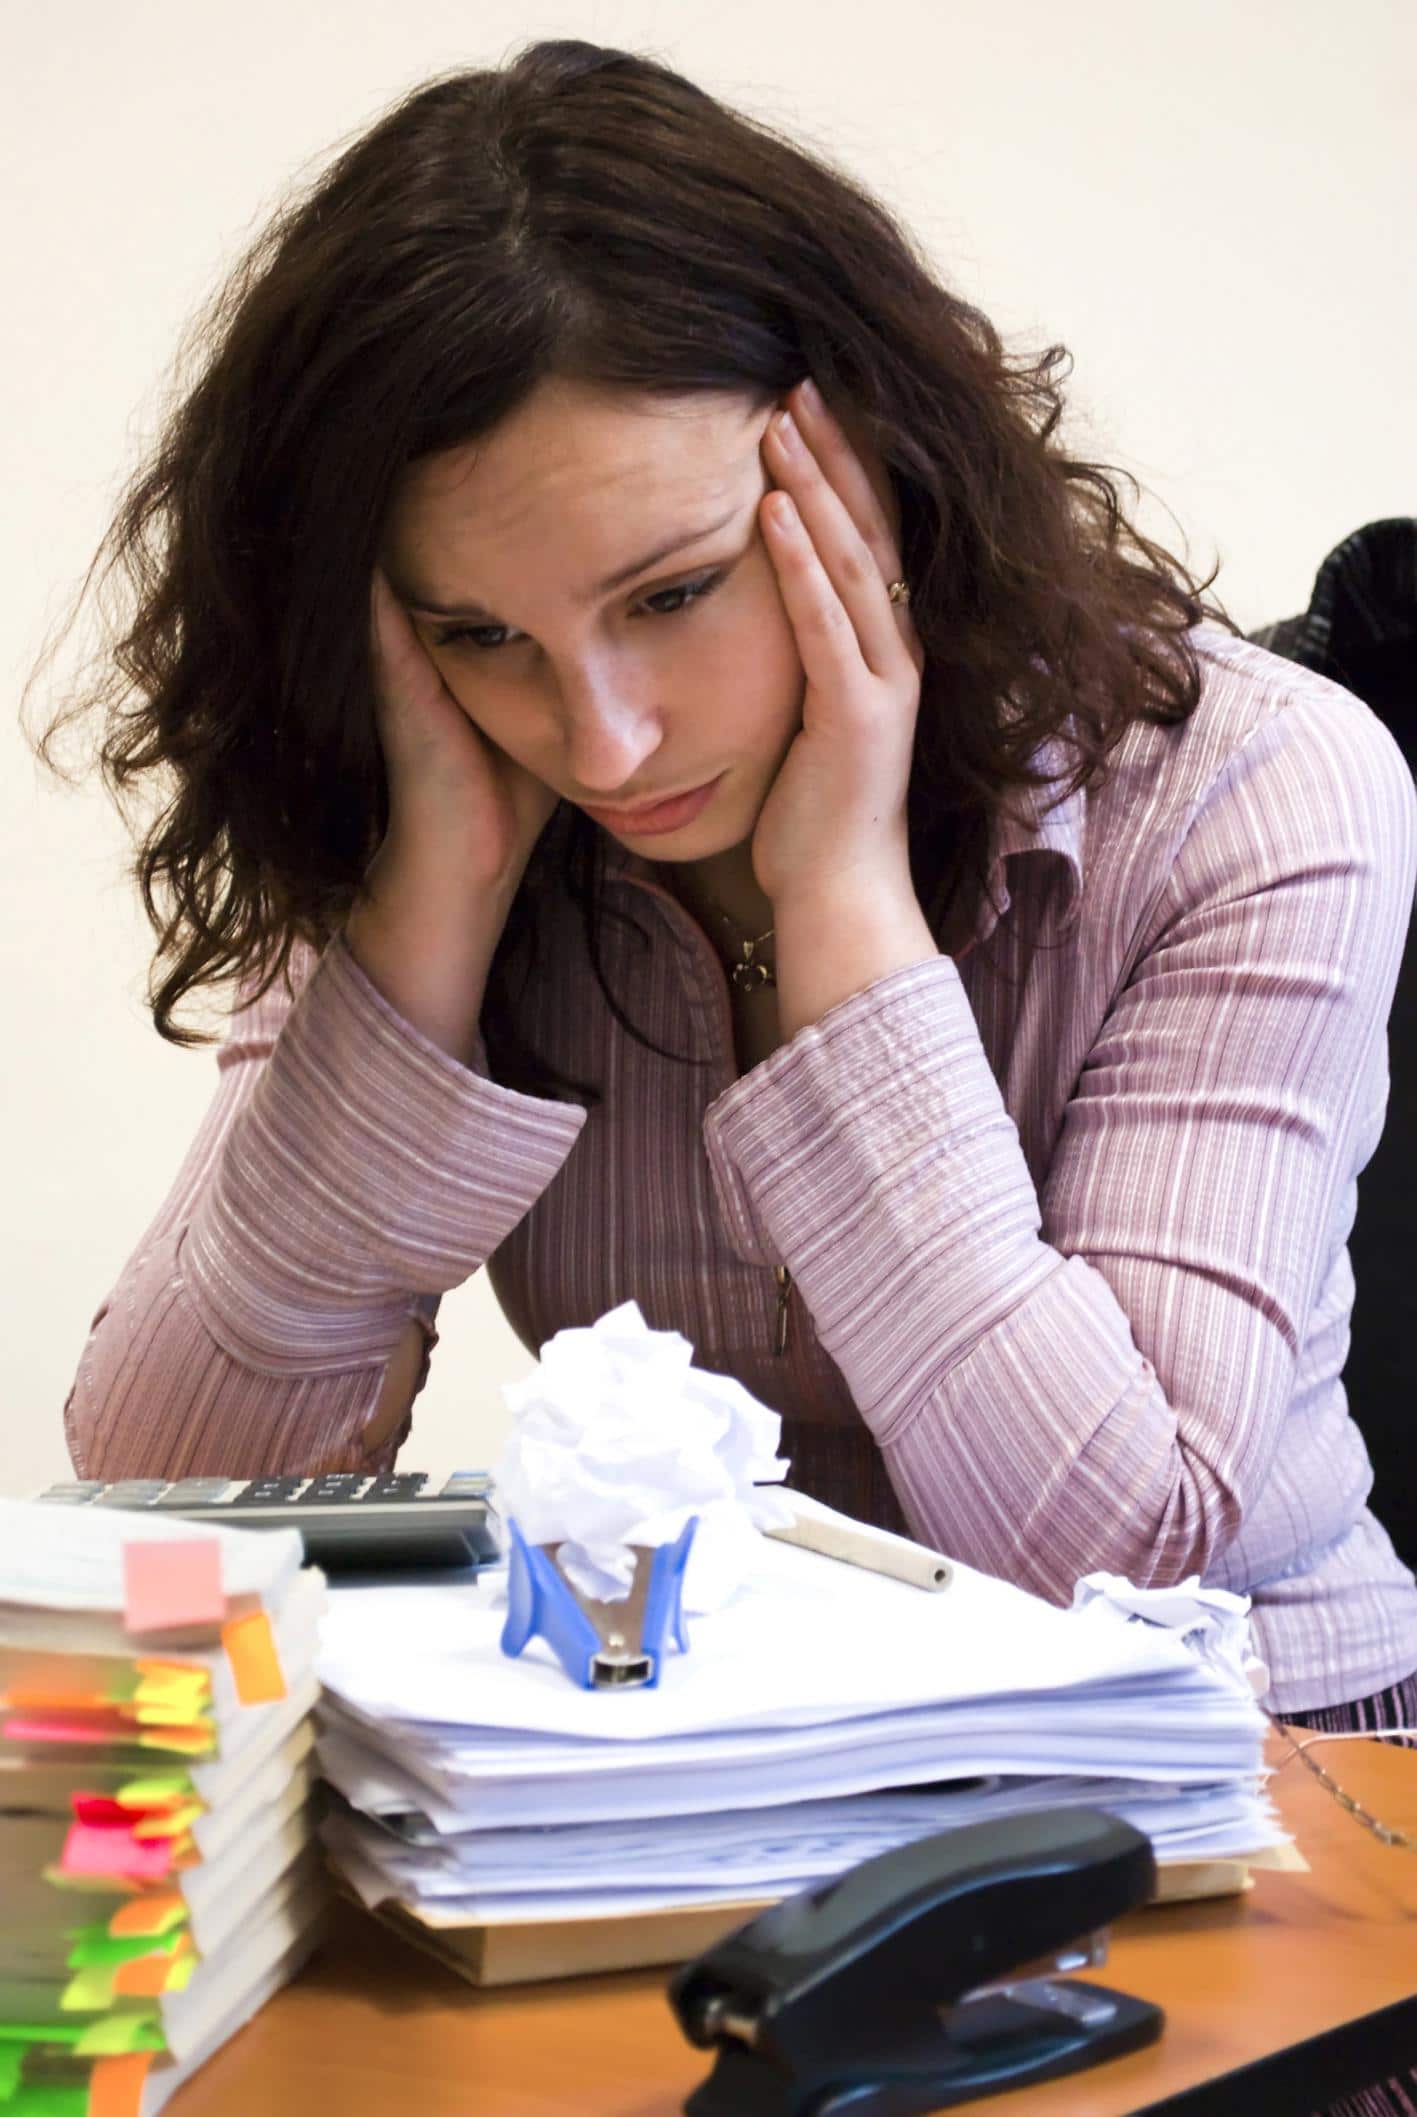 teacher burnout from too much work